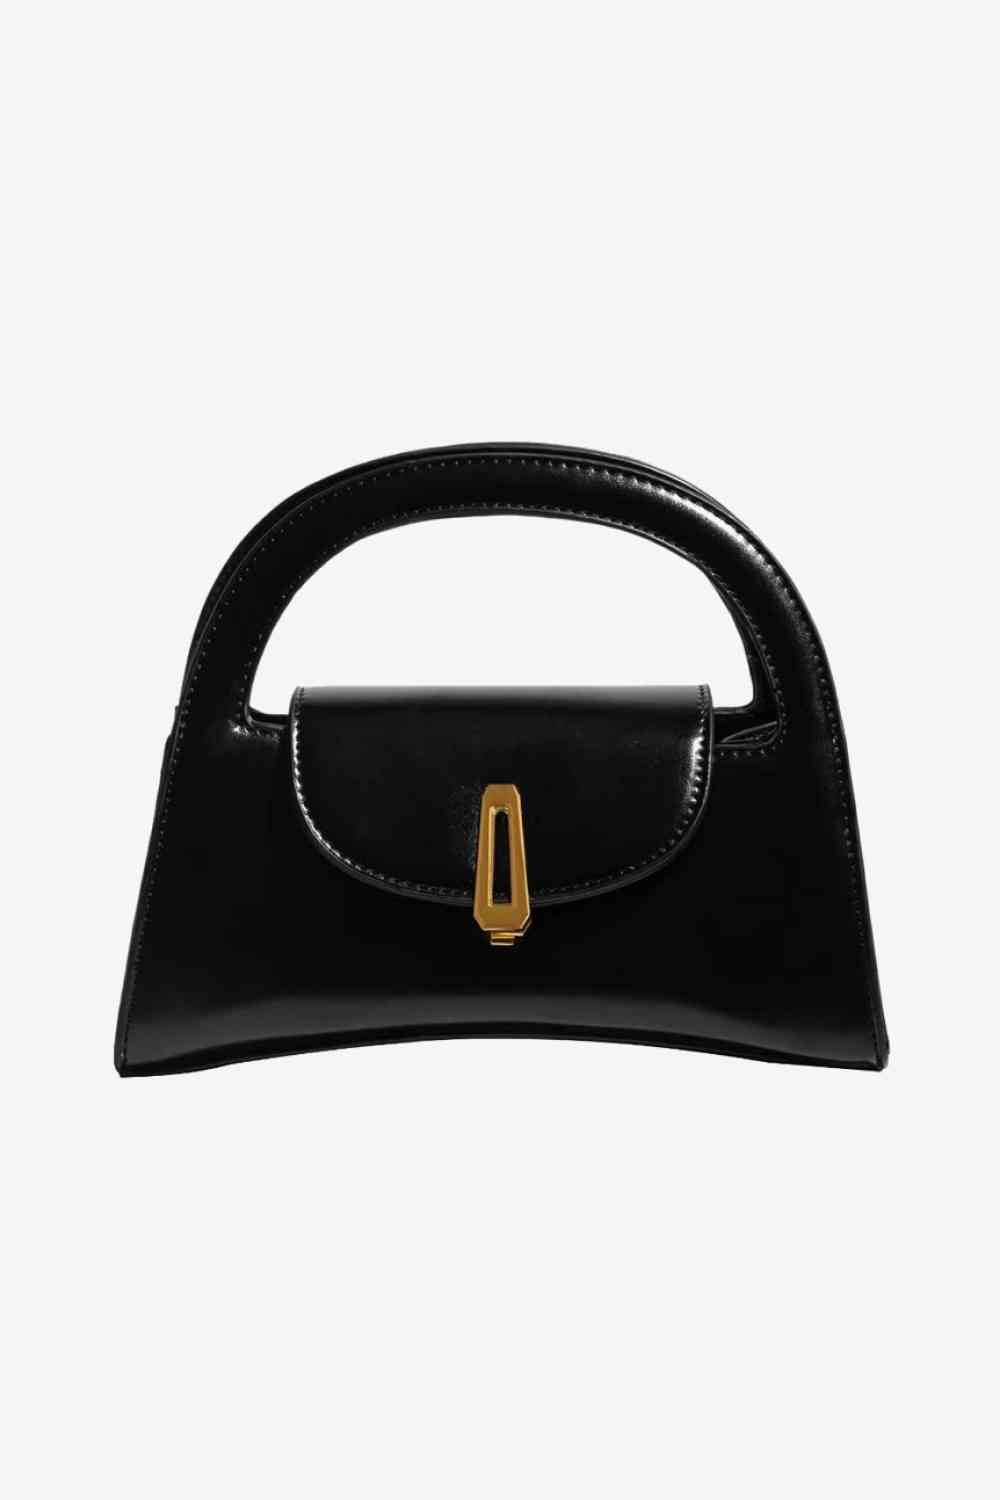 PU Leather Handbag Trendsi